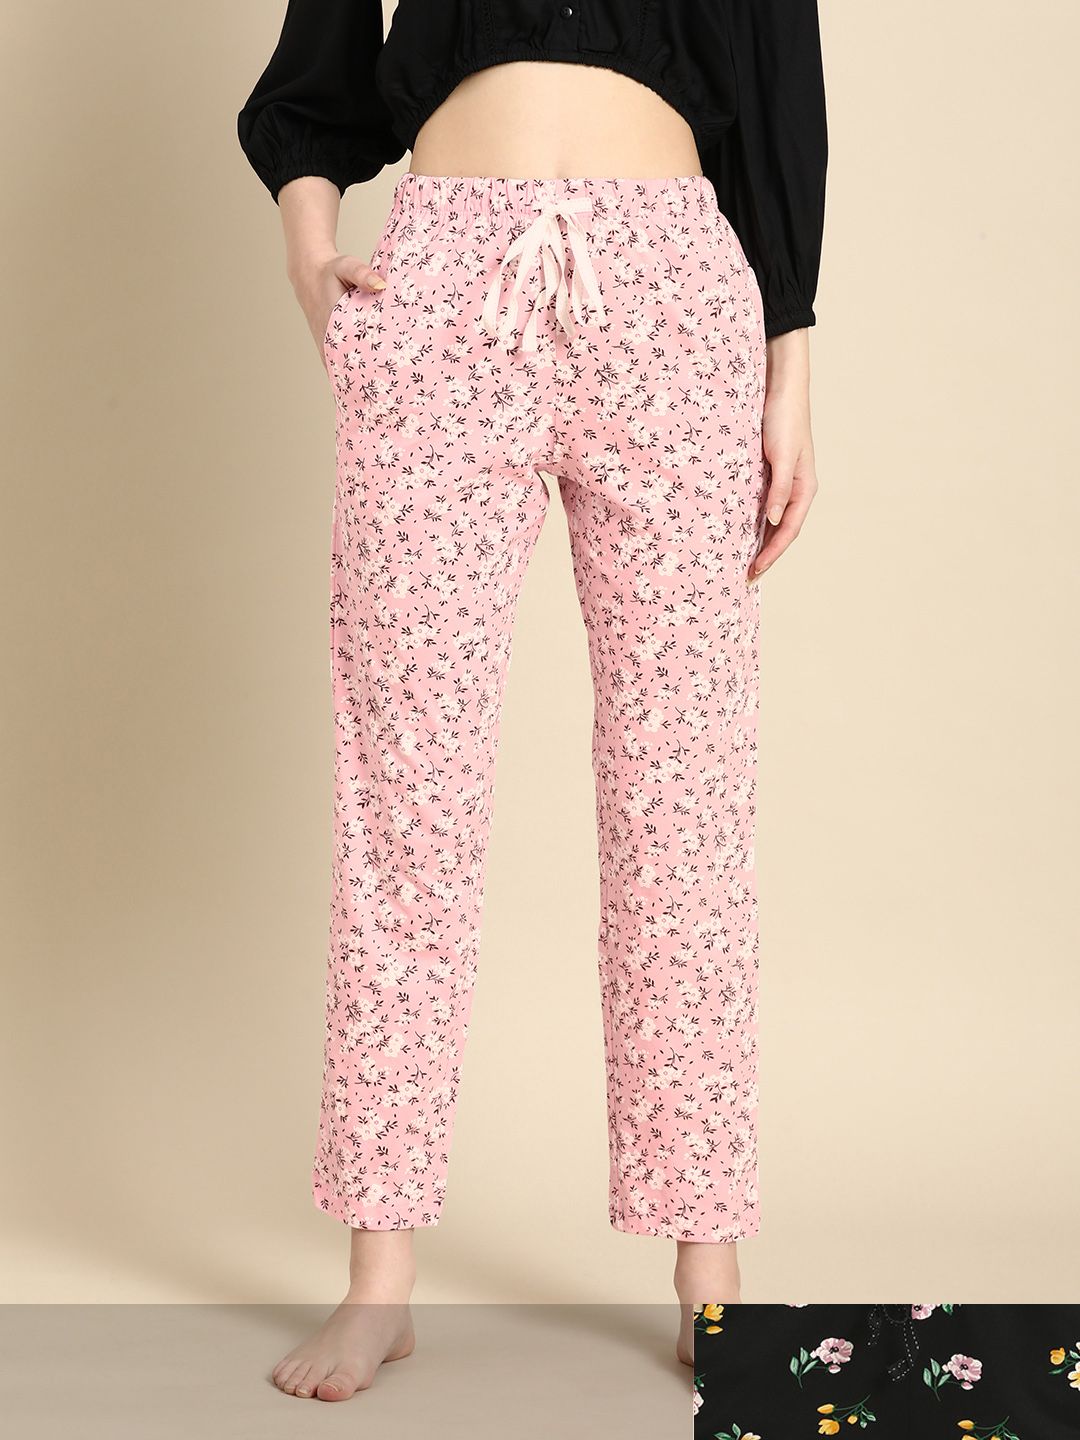 Dreamz by Pantaloons Women Pack of 2 Printed Pyjamas Price in India